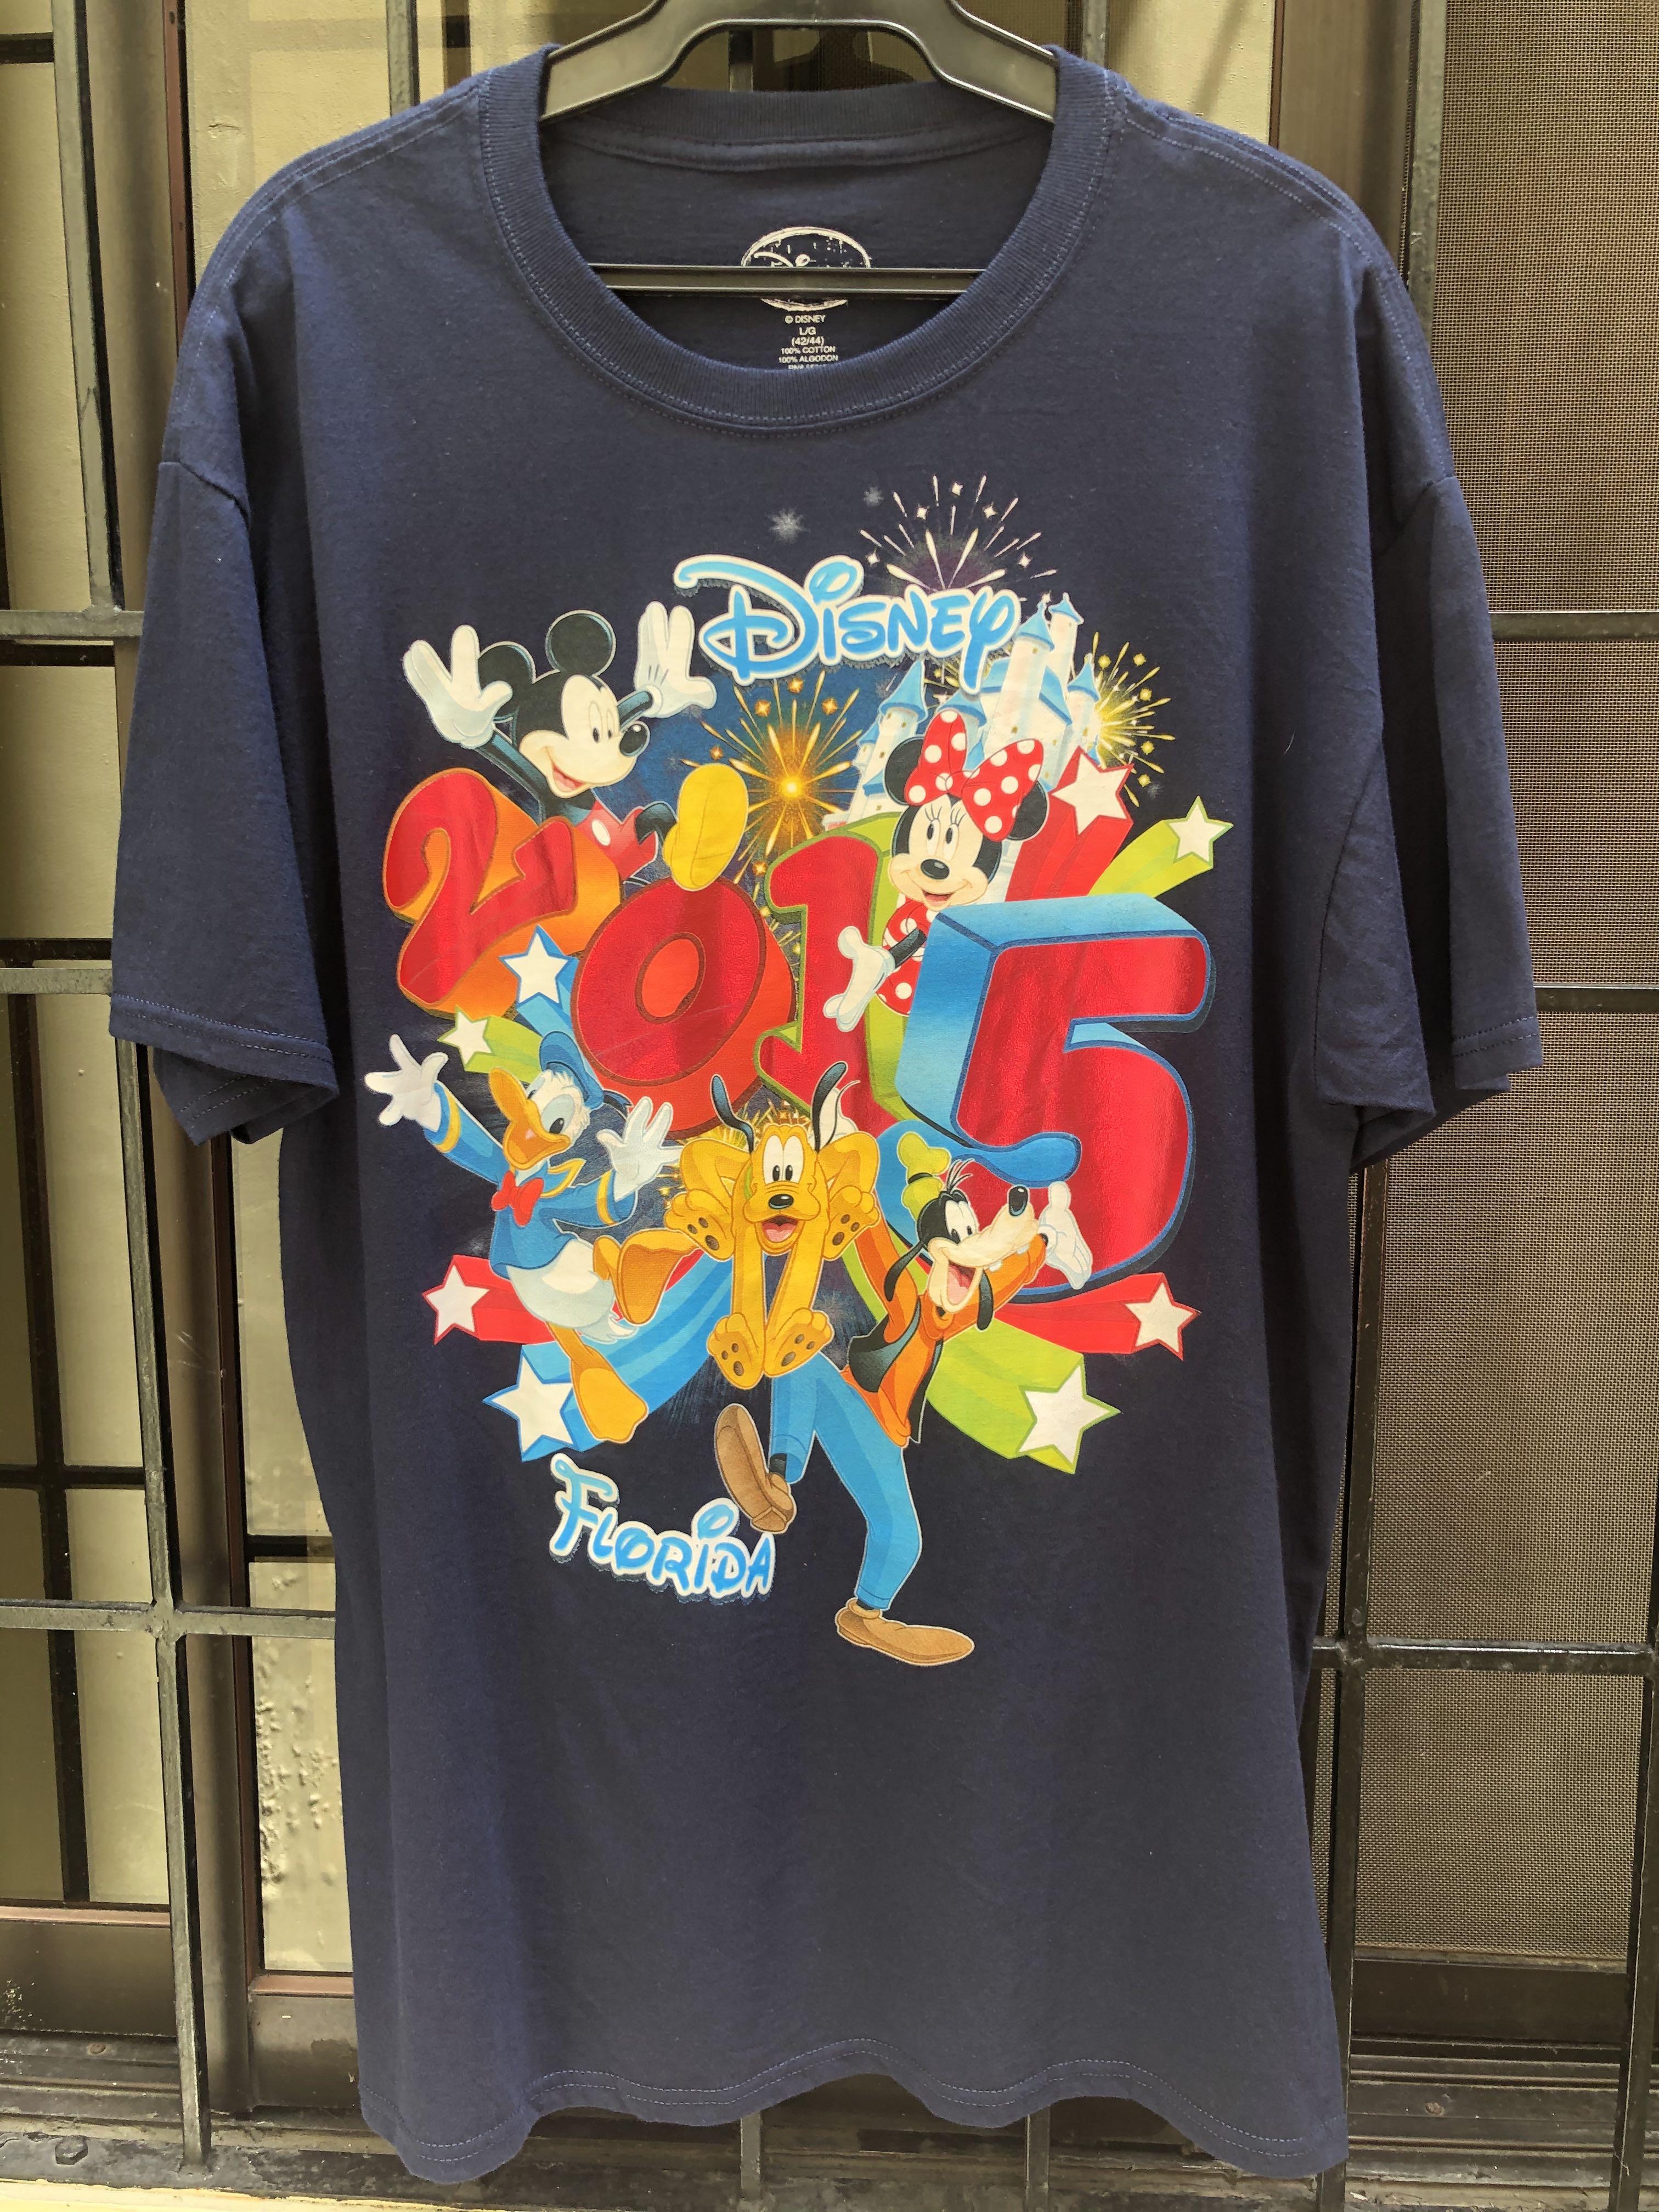 Disney 15 Florida Shirt Men S Fashion Tops Sets Tshirts Polo Shirts On Carousell